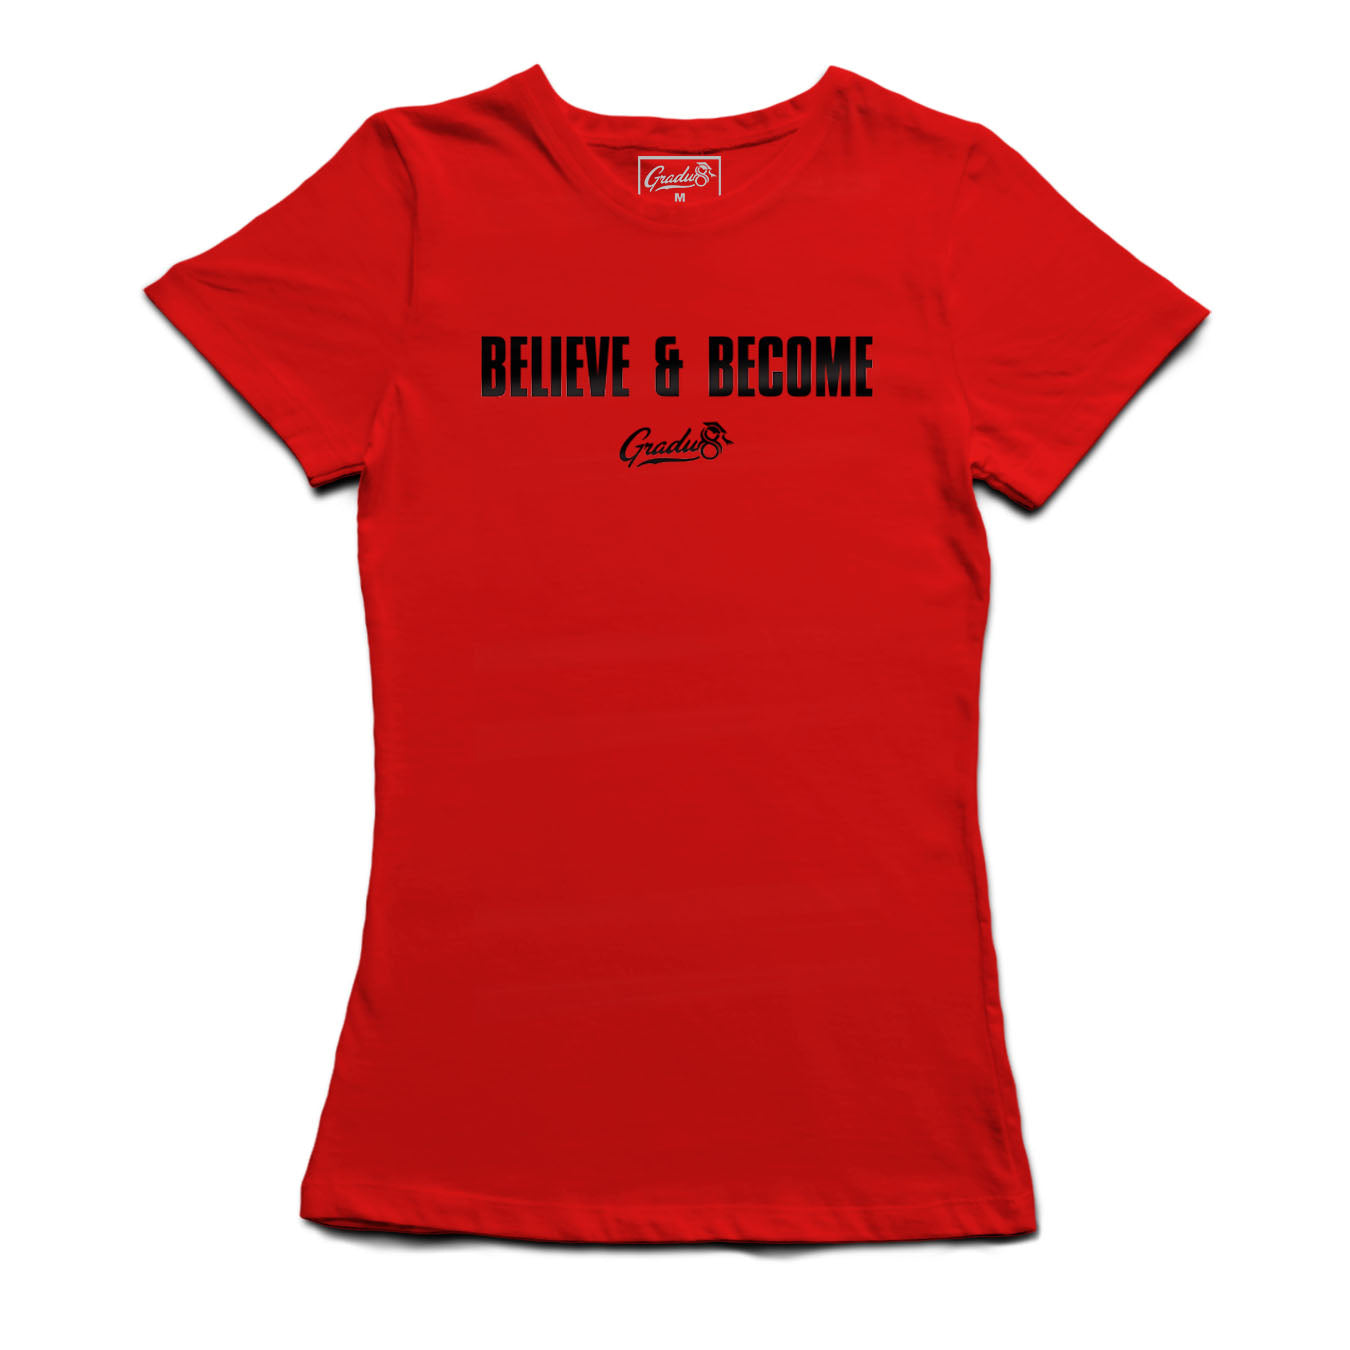 Women's Original Believe & Become T-shirt - Red